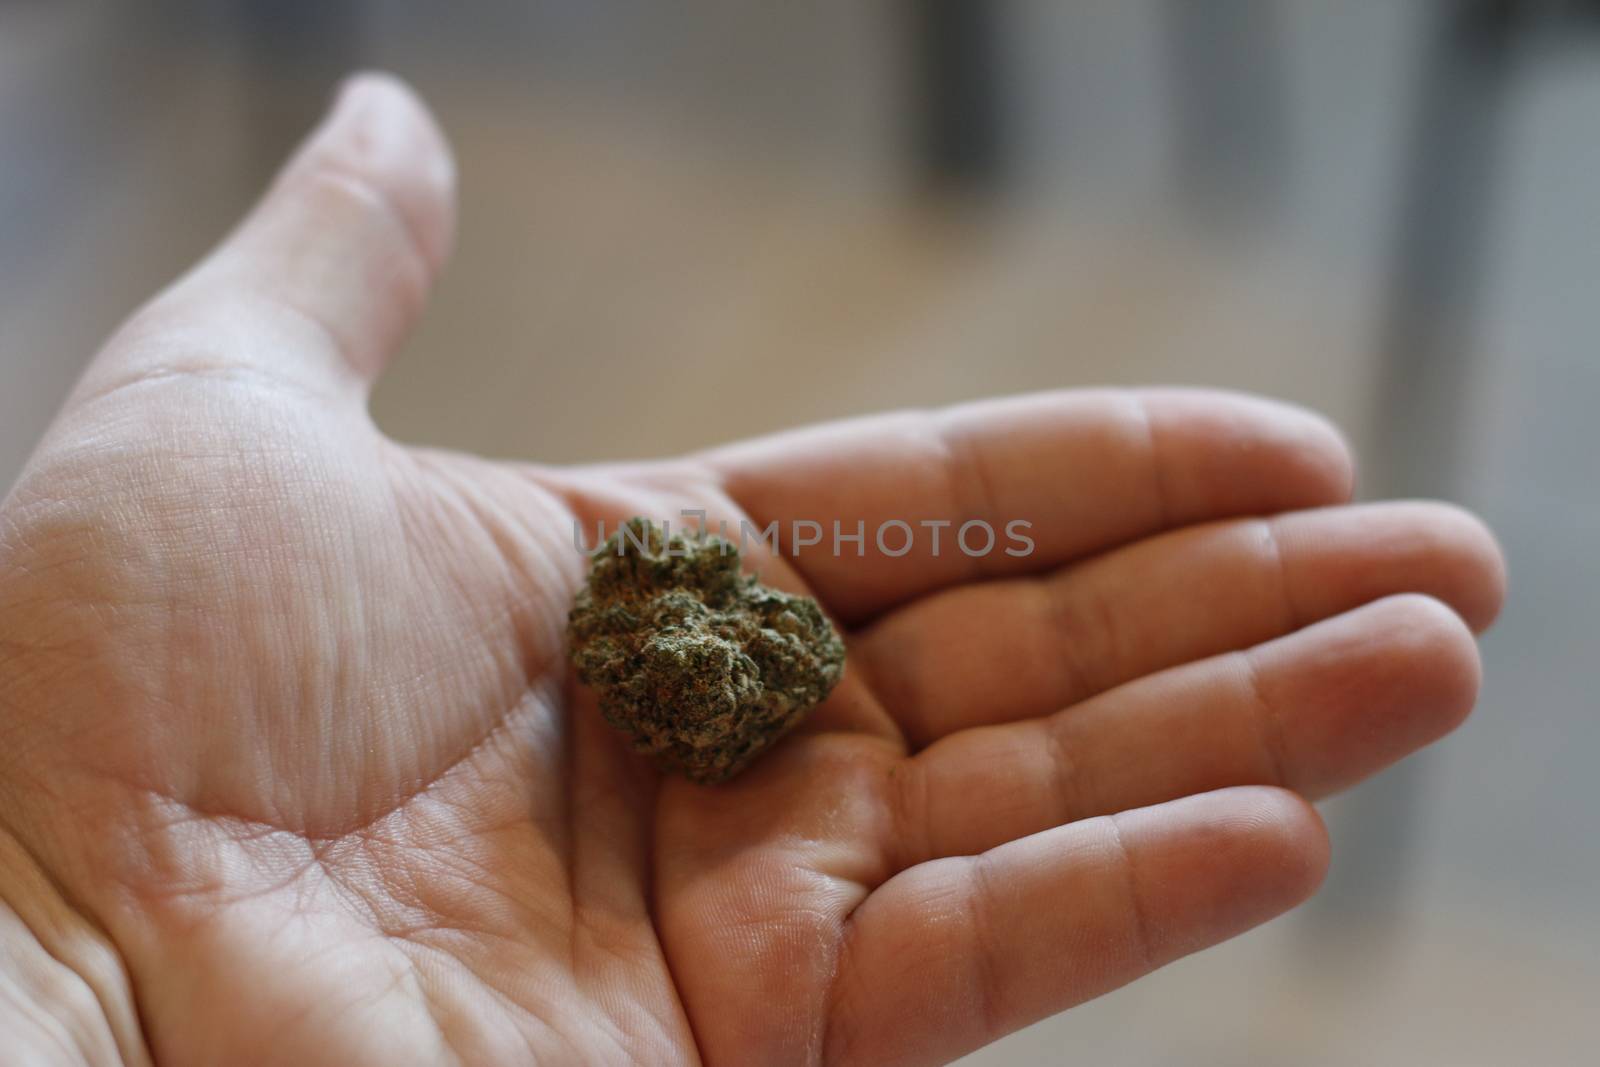 holding a large marijuana bud by mynewturtle1